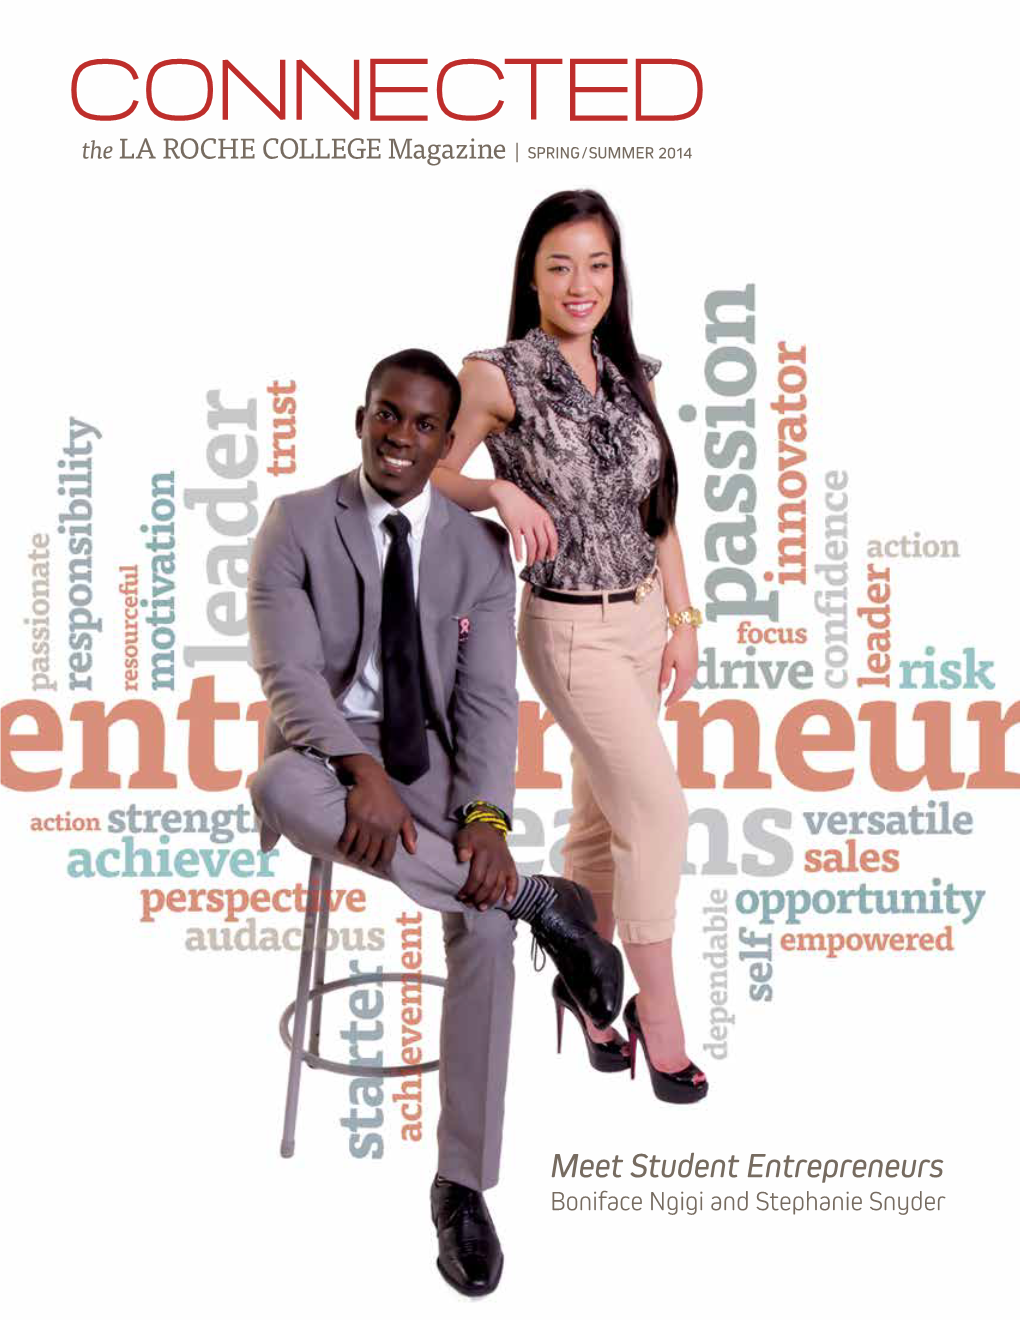 Meet Student Entrepreneurs Boniface Ngigi and Stephanie Snyder